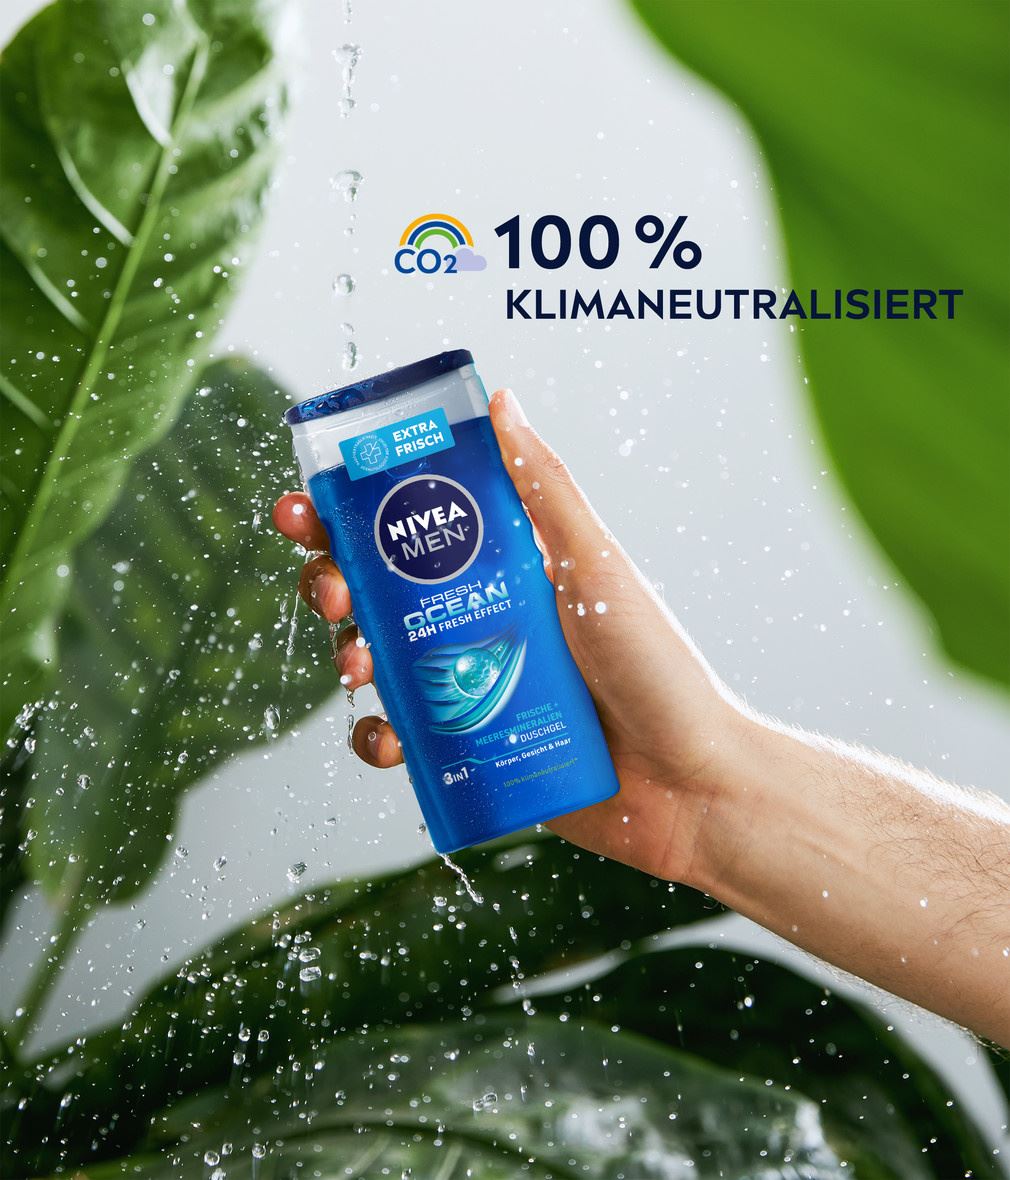 NIVEA MEN Duschgel FRESH OCEAN 24 H FRESH EFFECT Produktabbildung 100% Klimaneutralisiert